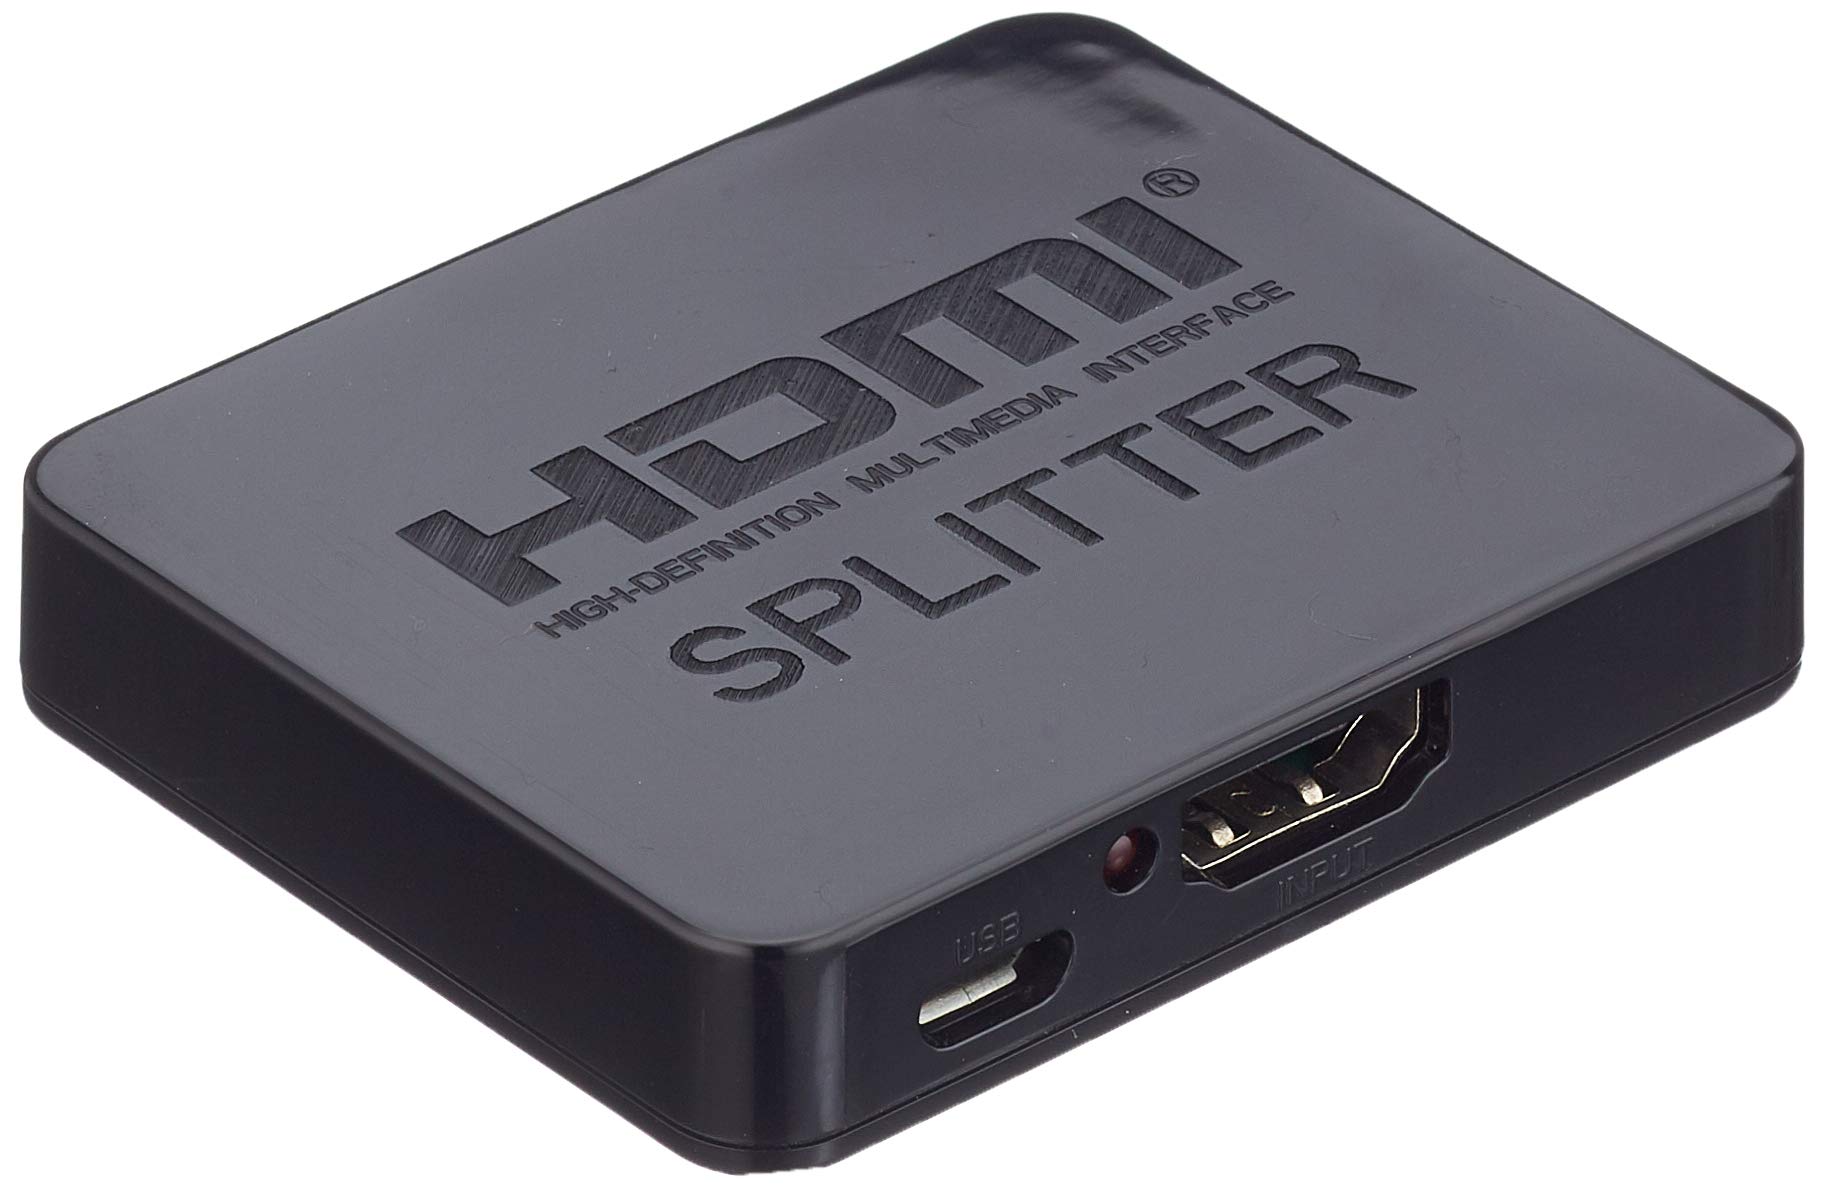 PremiumCord 4K HDMI Splitter 1-2 Port mit Netzteil, mit USB Stromversorgung, Video Auflösung 4Kx2K 2160p UHD, Full HD 1080p 60Hz, 3D, HDCP, Farbe schwarz, khsplit2c